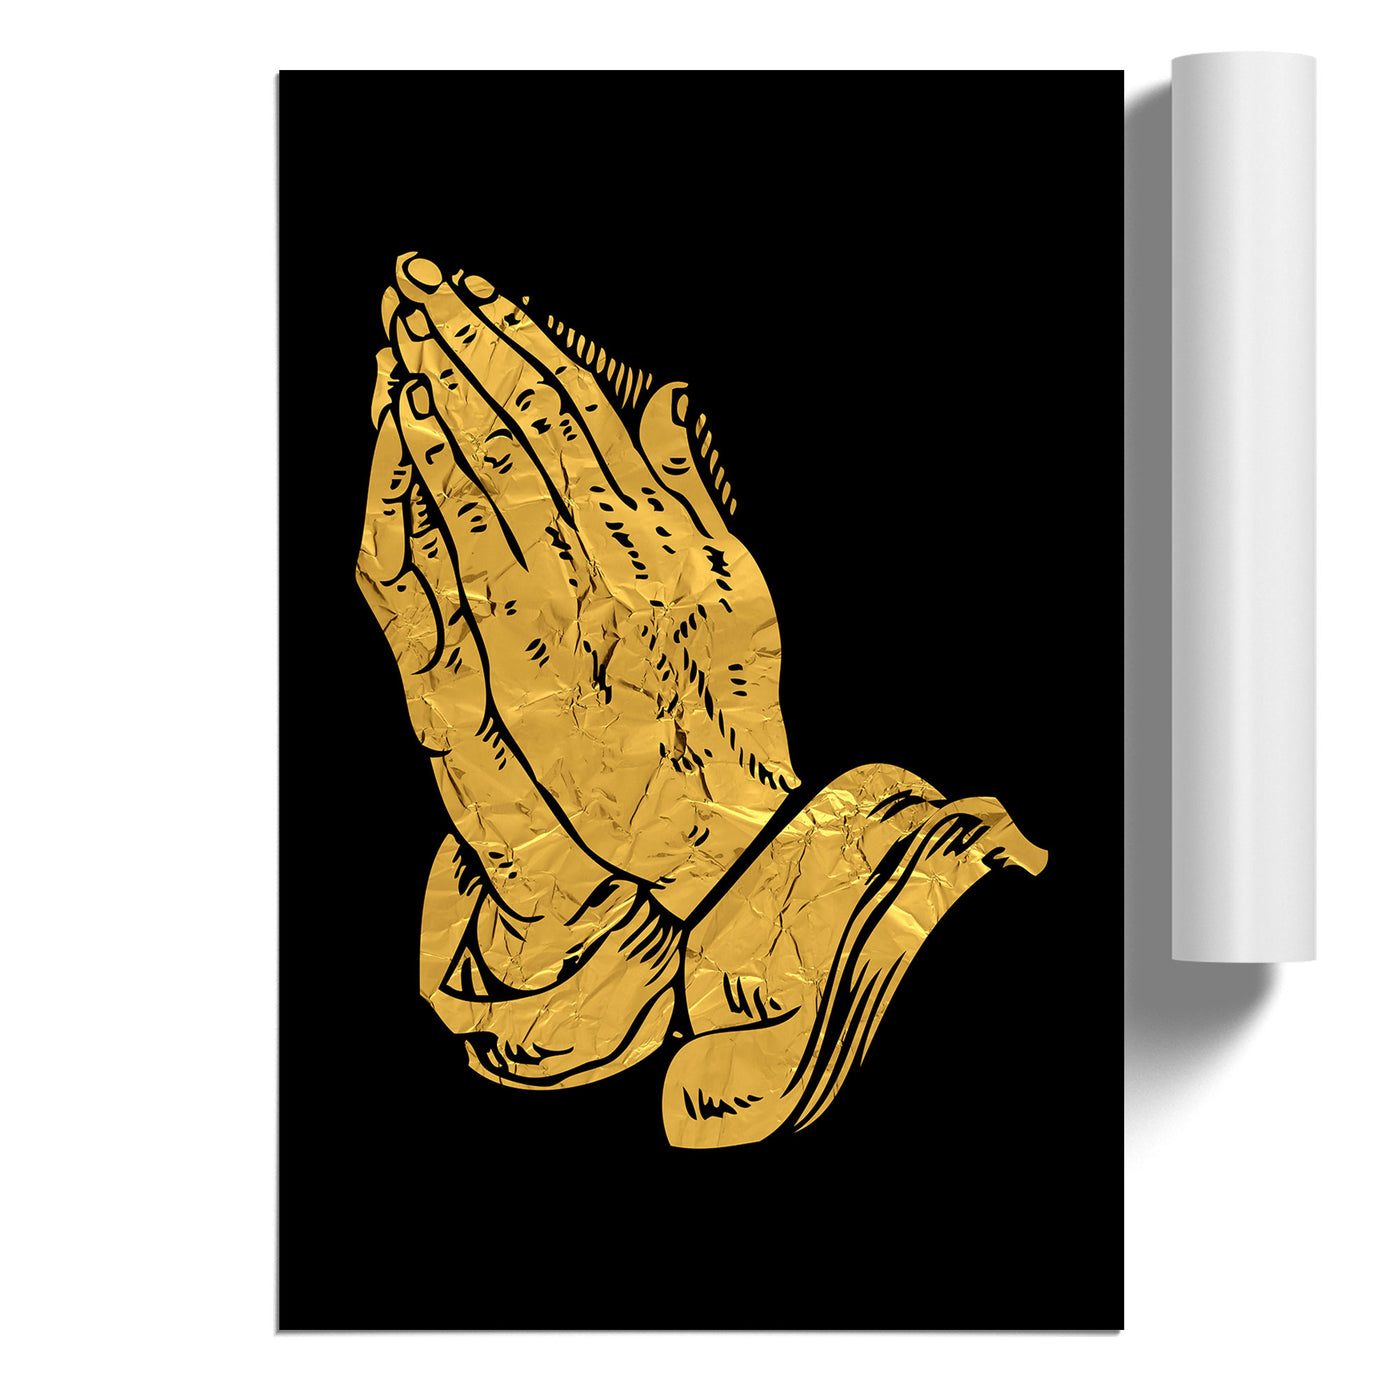 Praying Hands in Gold